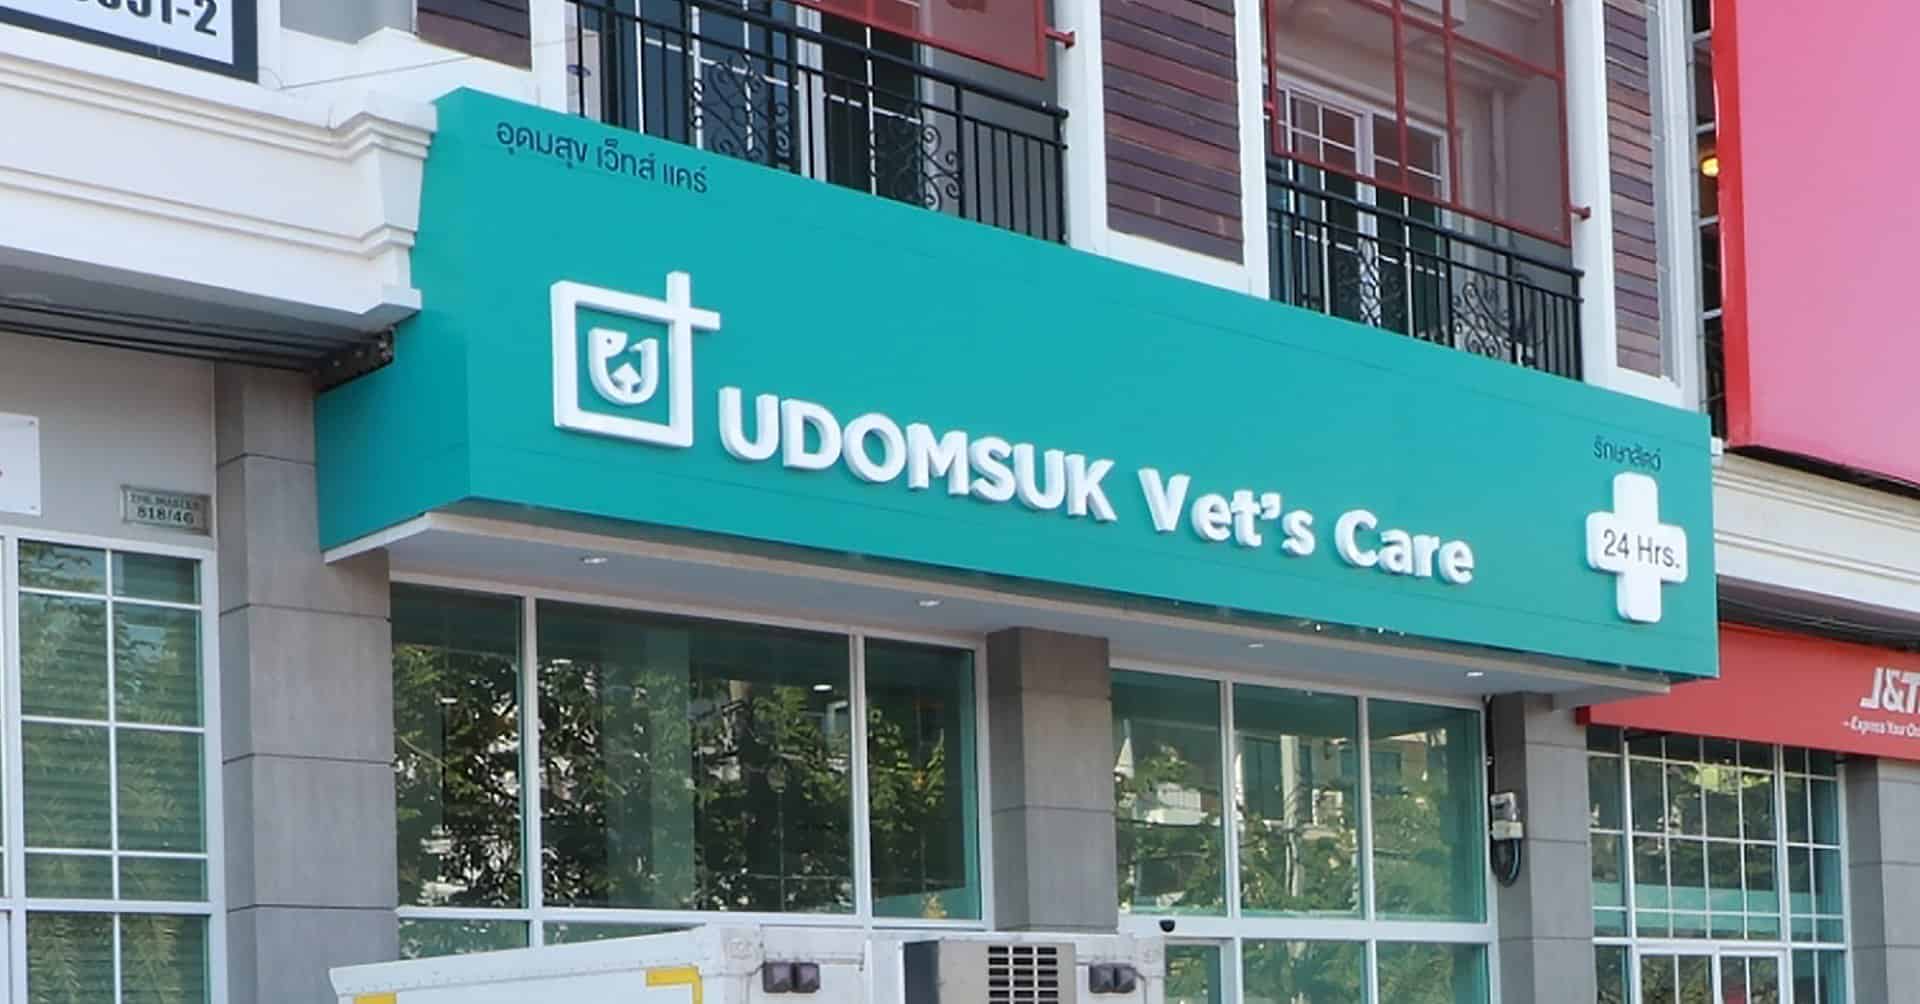 Udomsuk Vet's Care (โรงพยาบาลสัตว์อุดมสุข เว็ทส์) 1